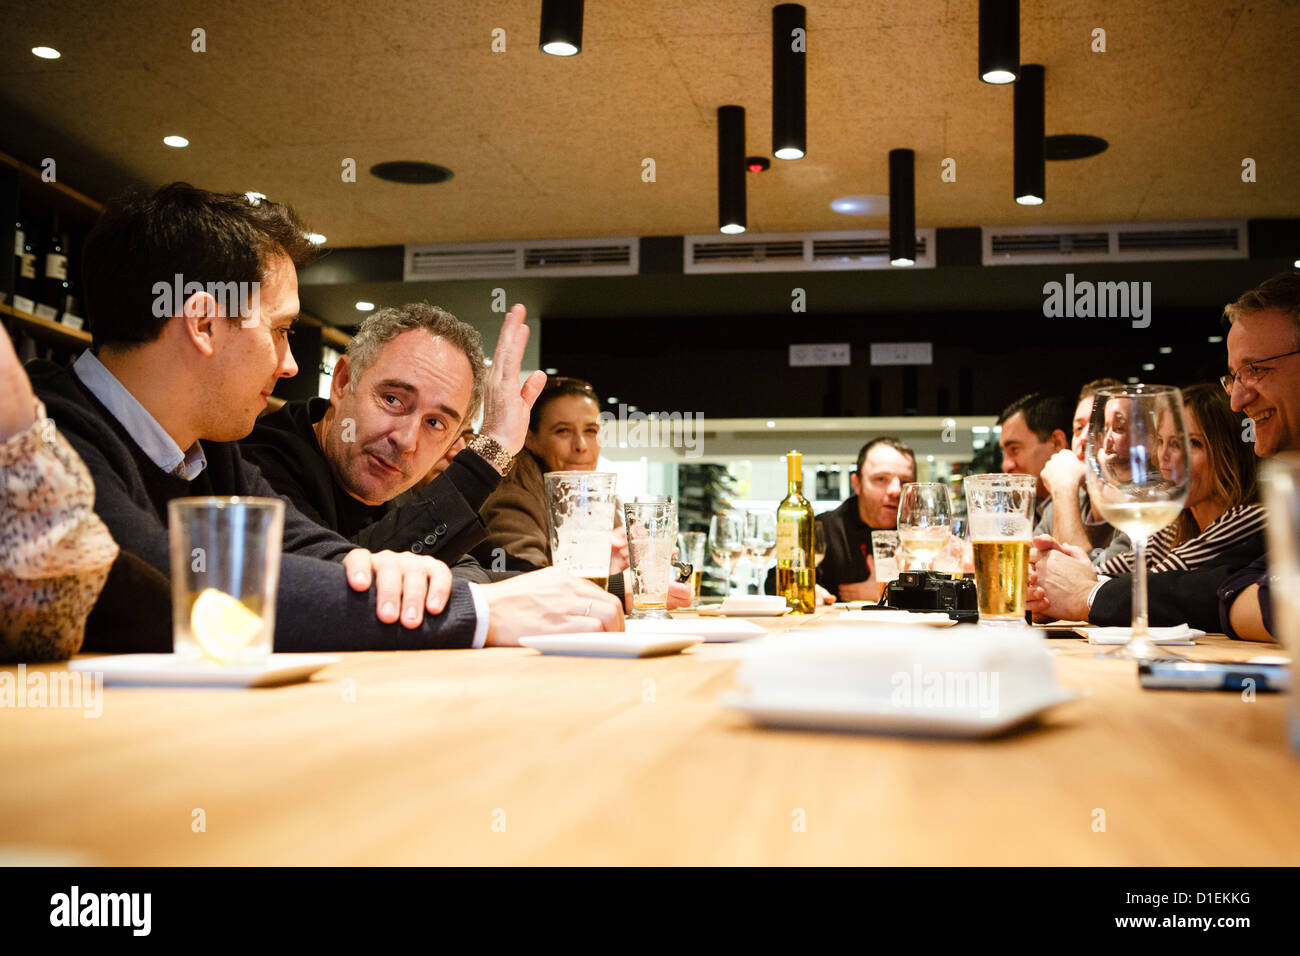 15/12/12 Chefs Ferran Adria and Francis Paniego in La Tavina, Logroño, La Rioja, Spain. City was Gastronomic Capital Spain 2012. Stock Photo